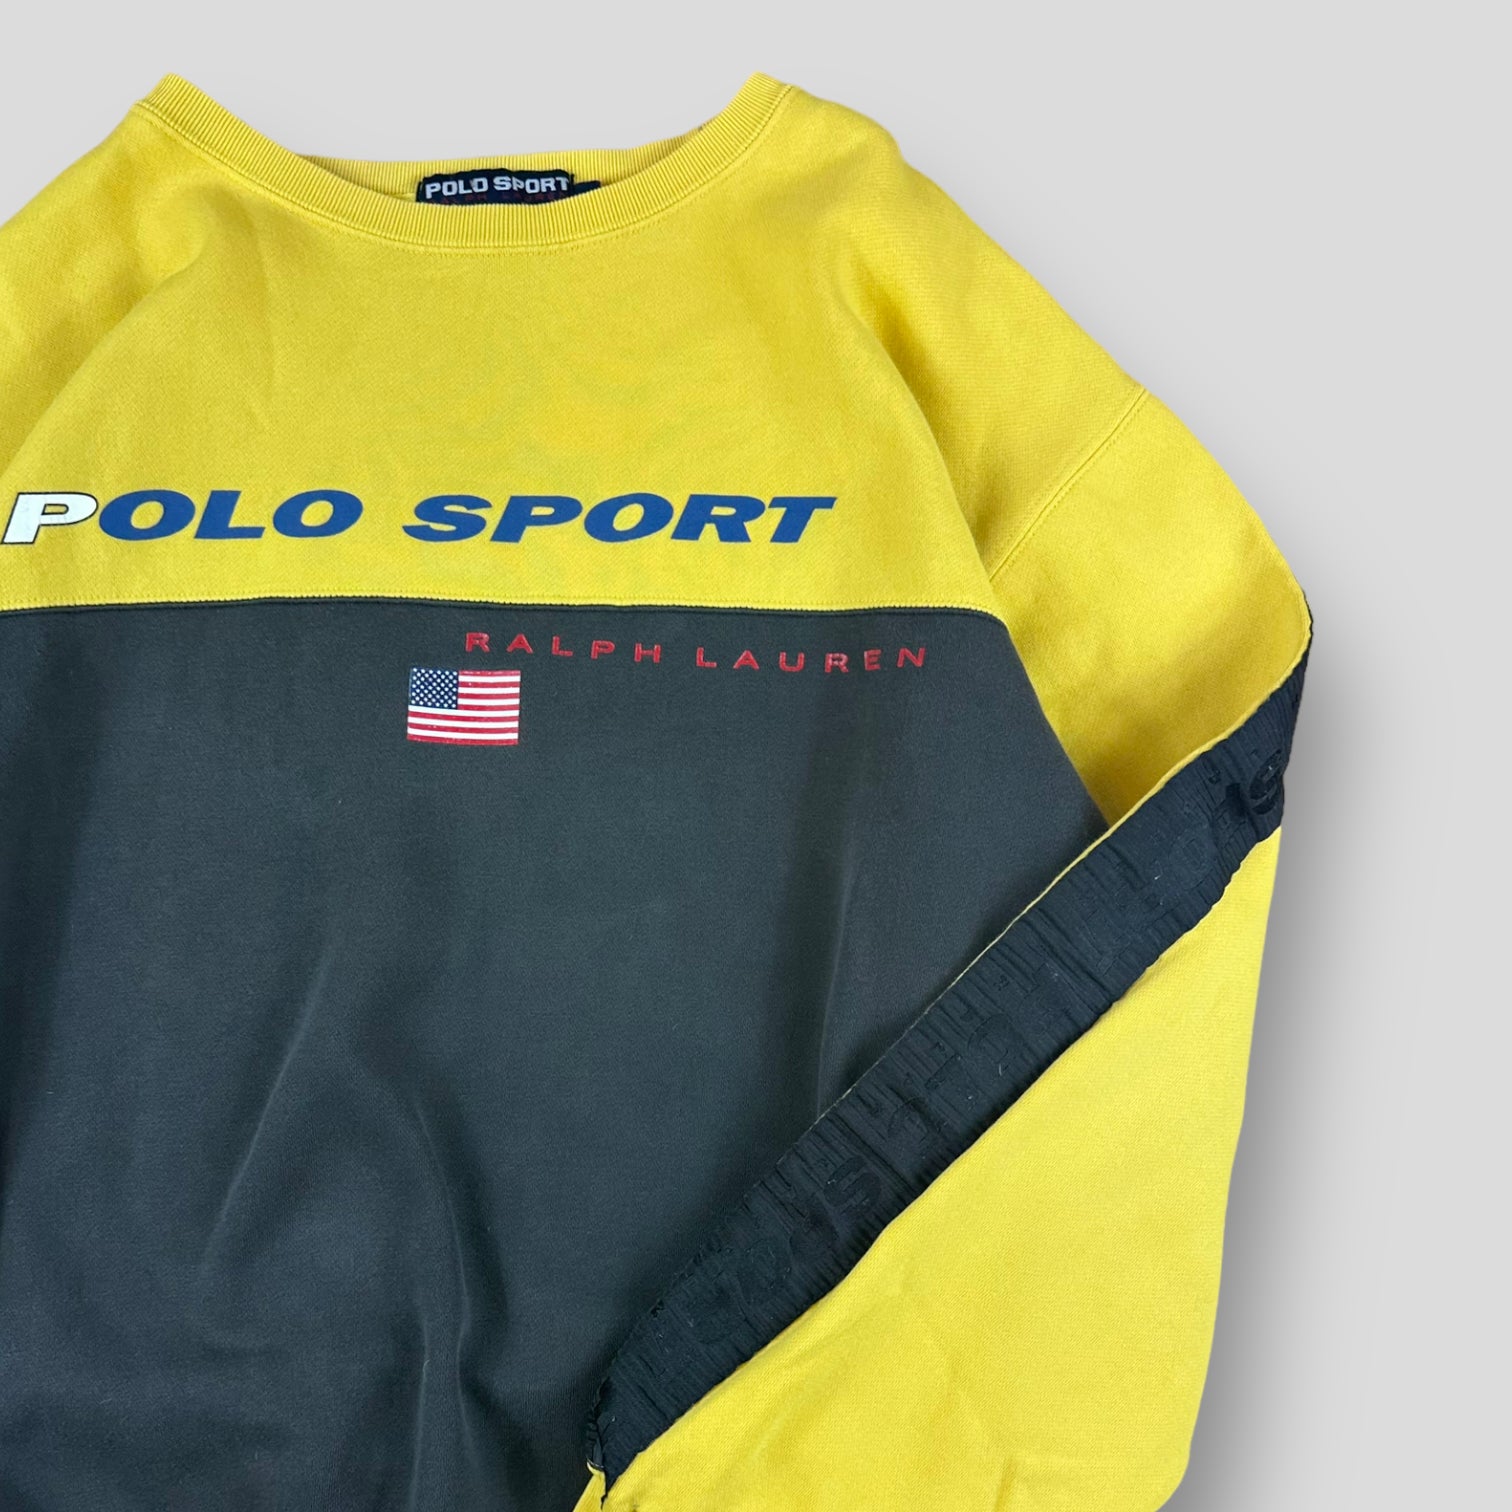 Polo sport sweater